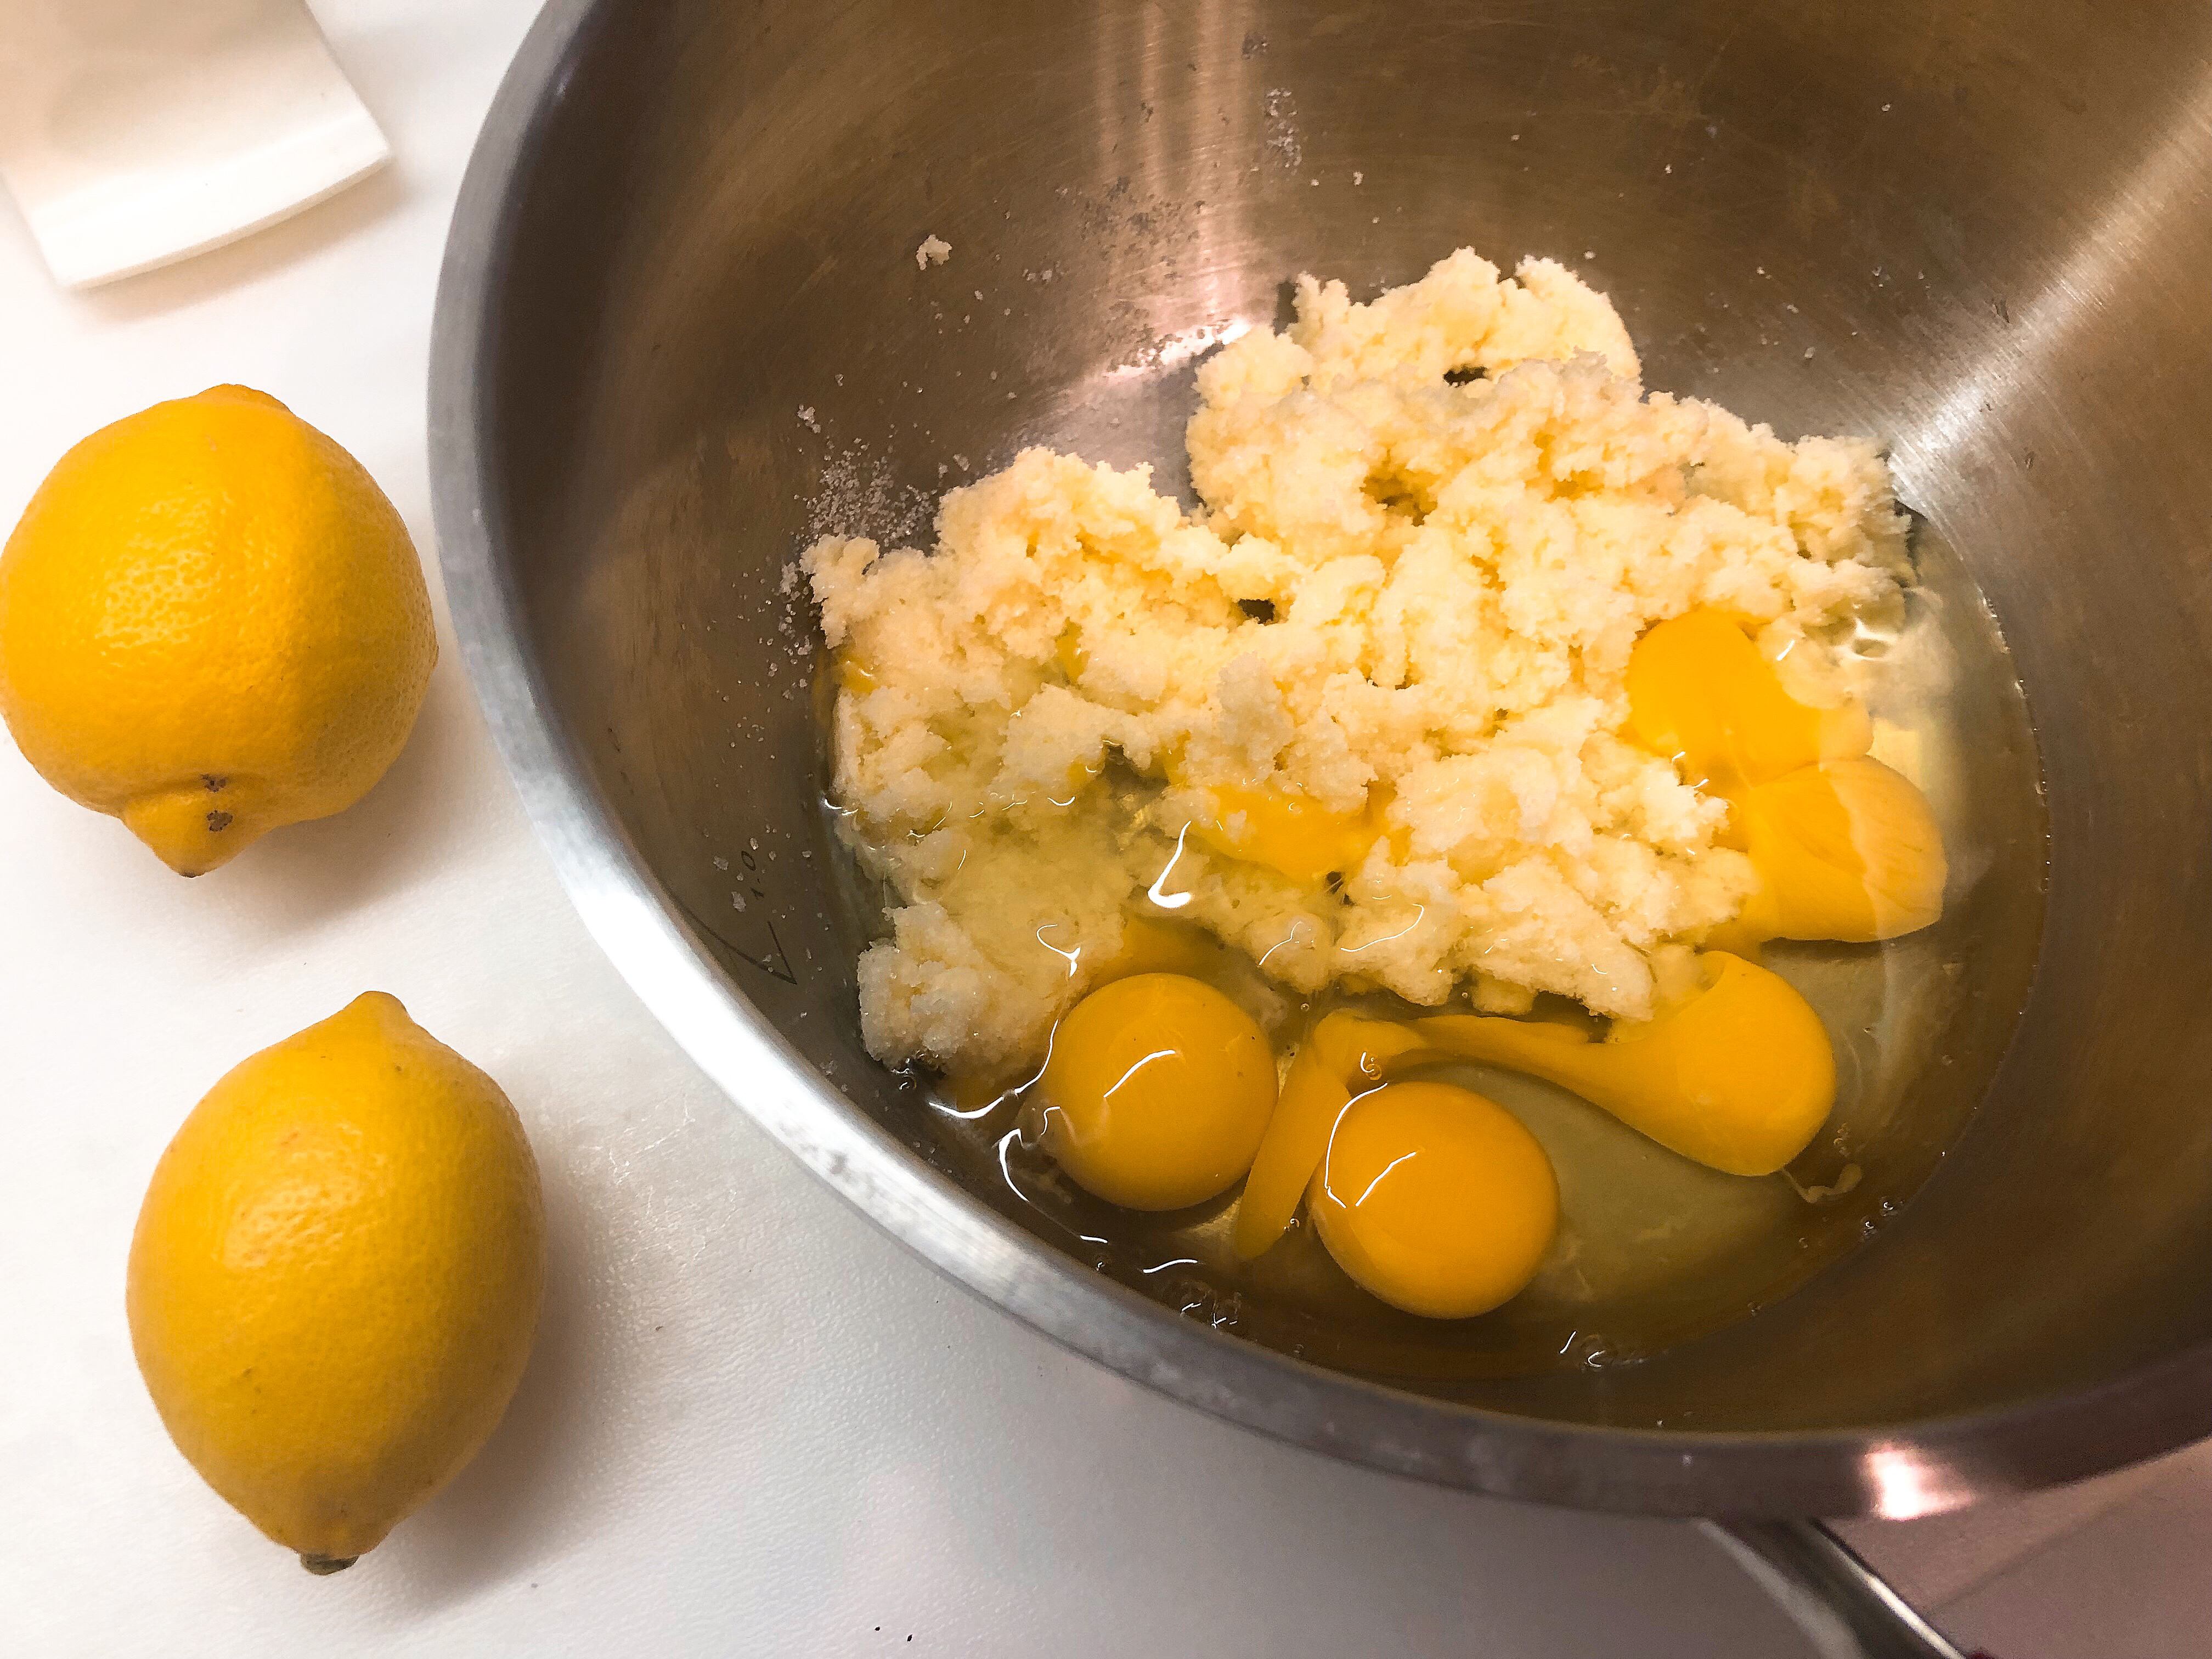 Add eggs to make dough